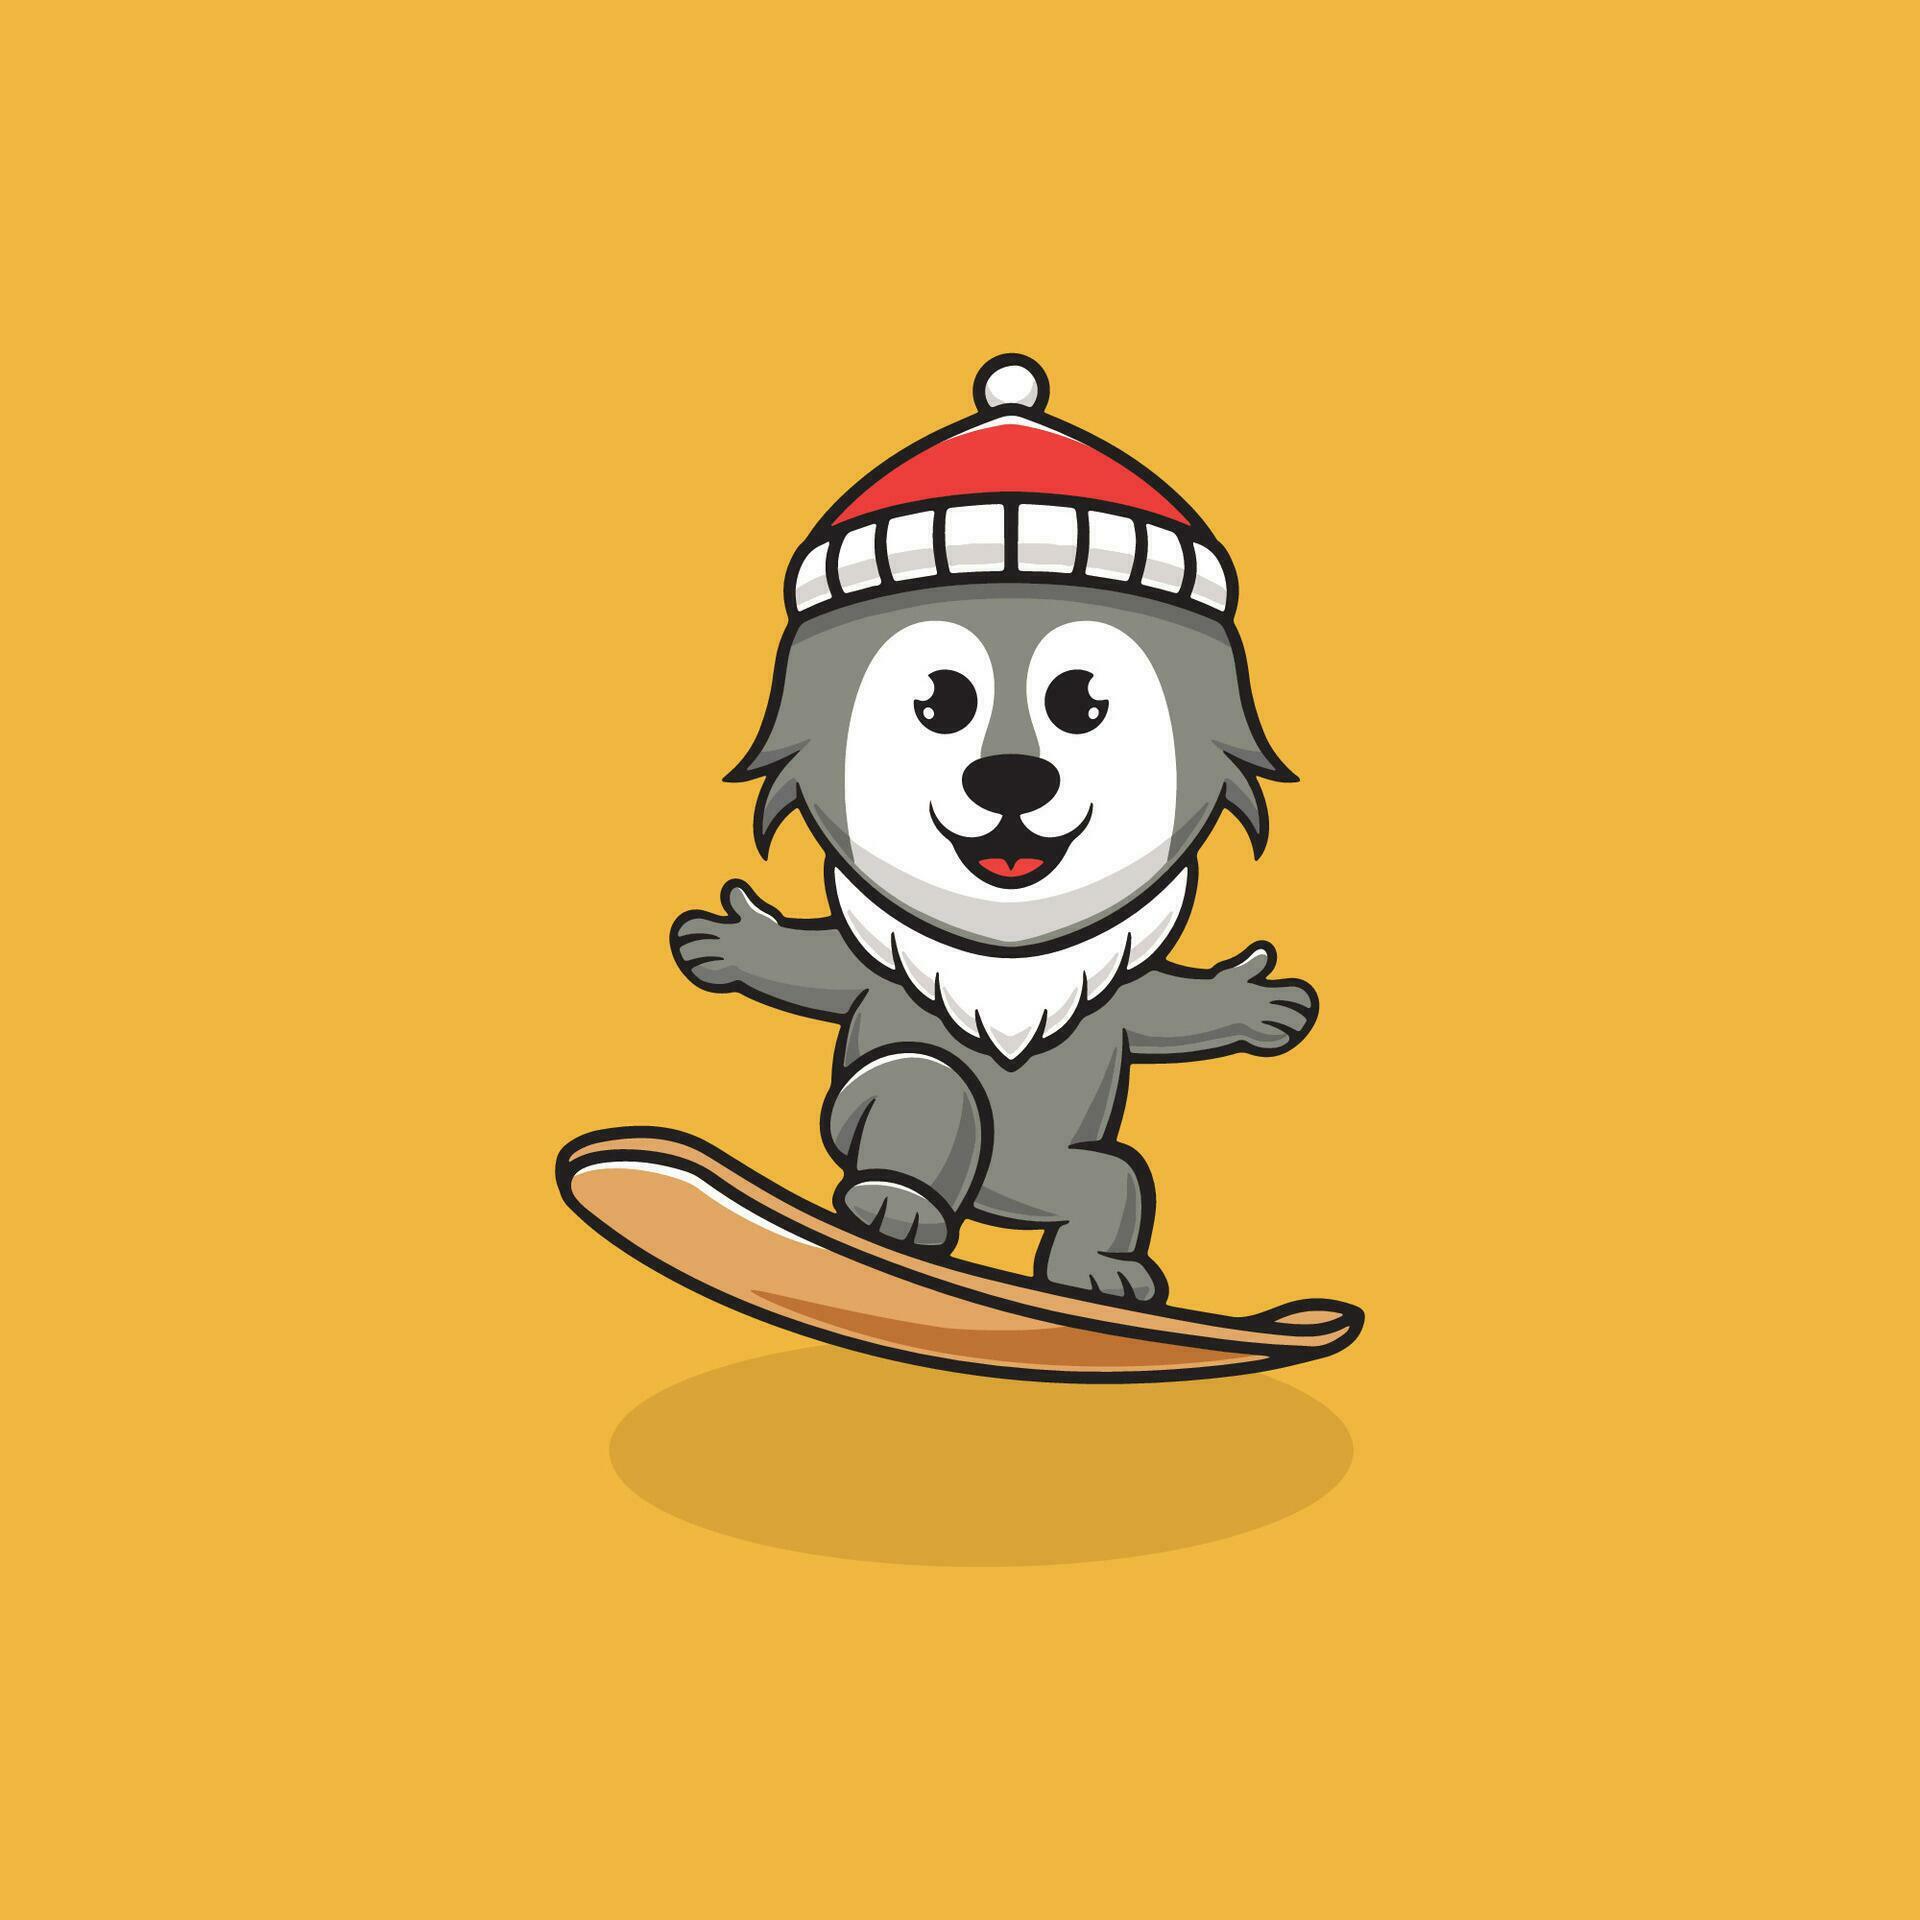 Cute wolf snowboarding at christmas cartoon illustration 34467581 ...